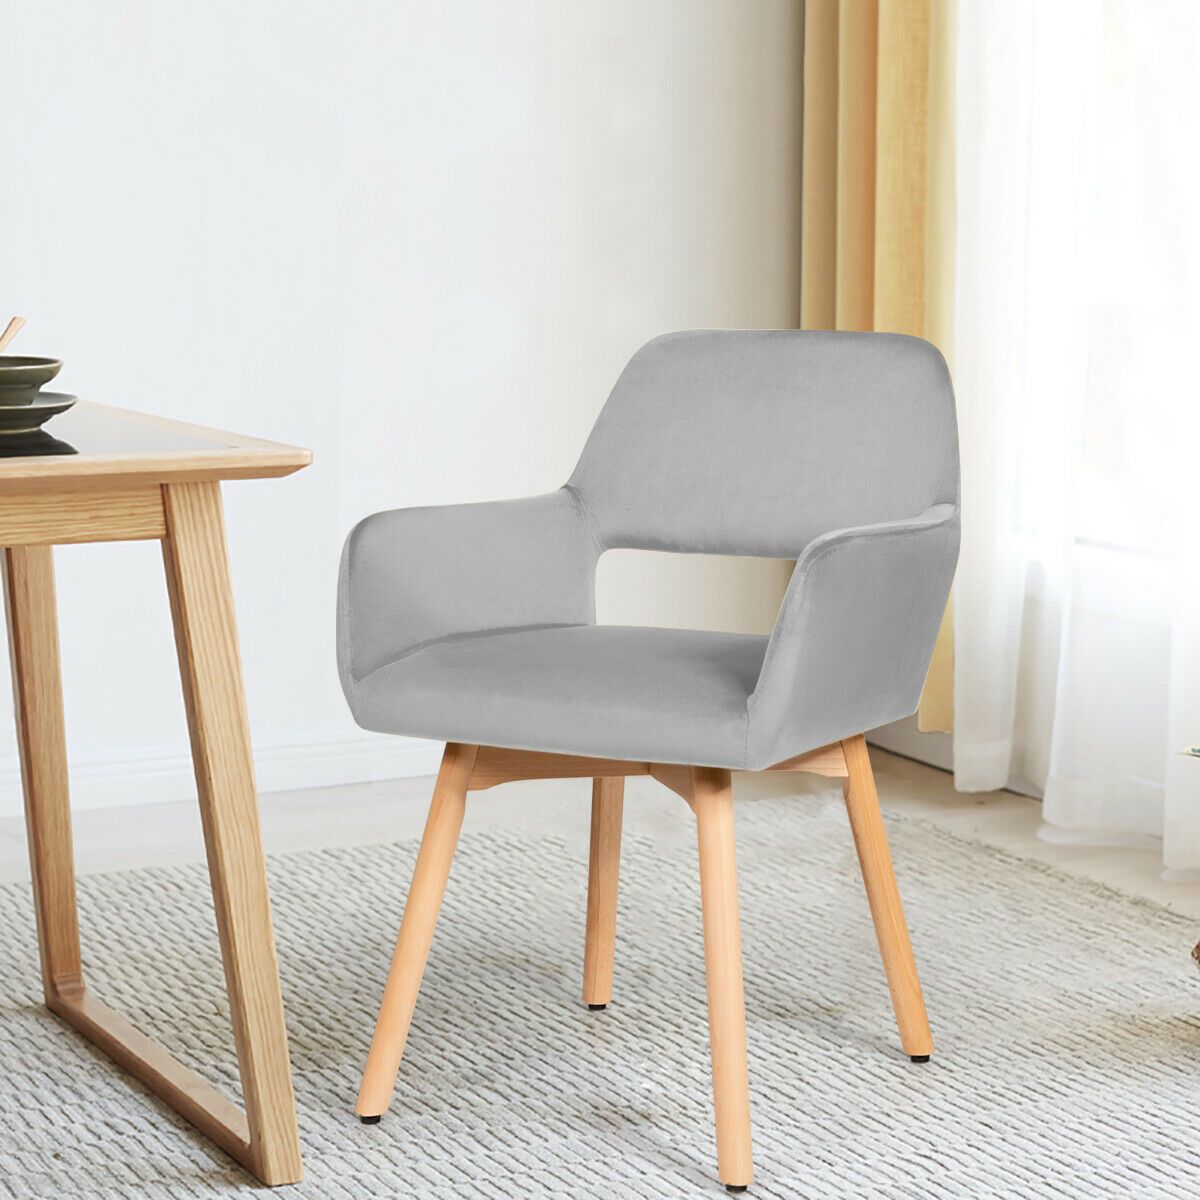 2 Pieces Retro Styled Velvet Chairs